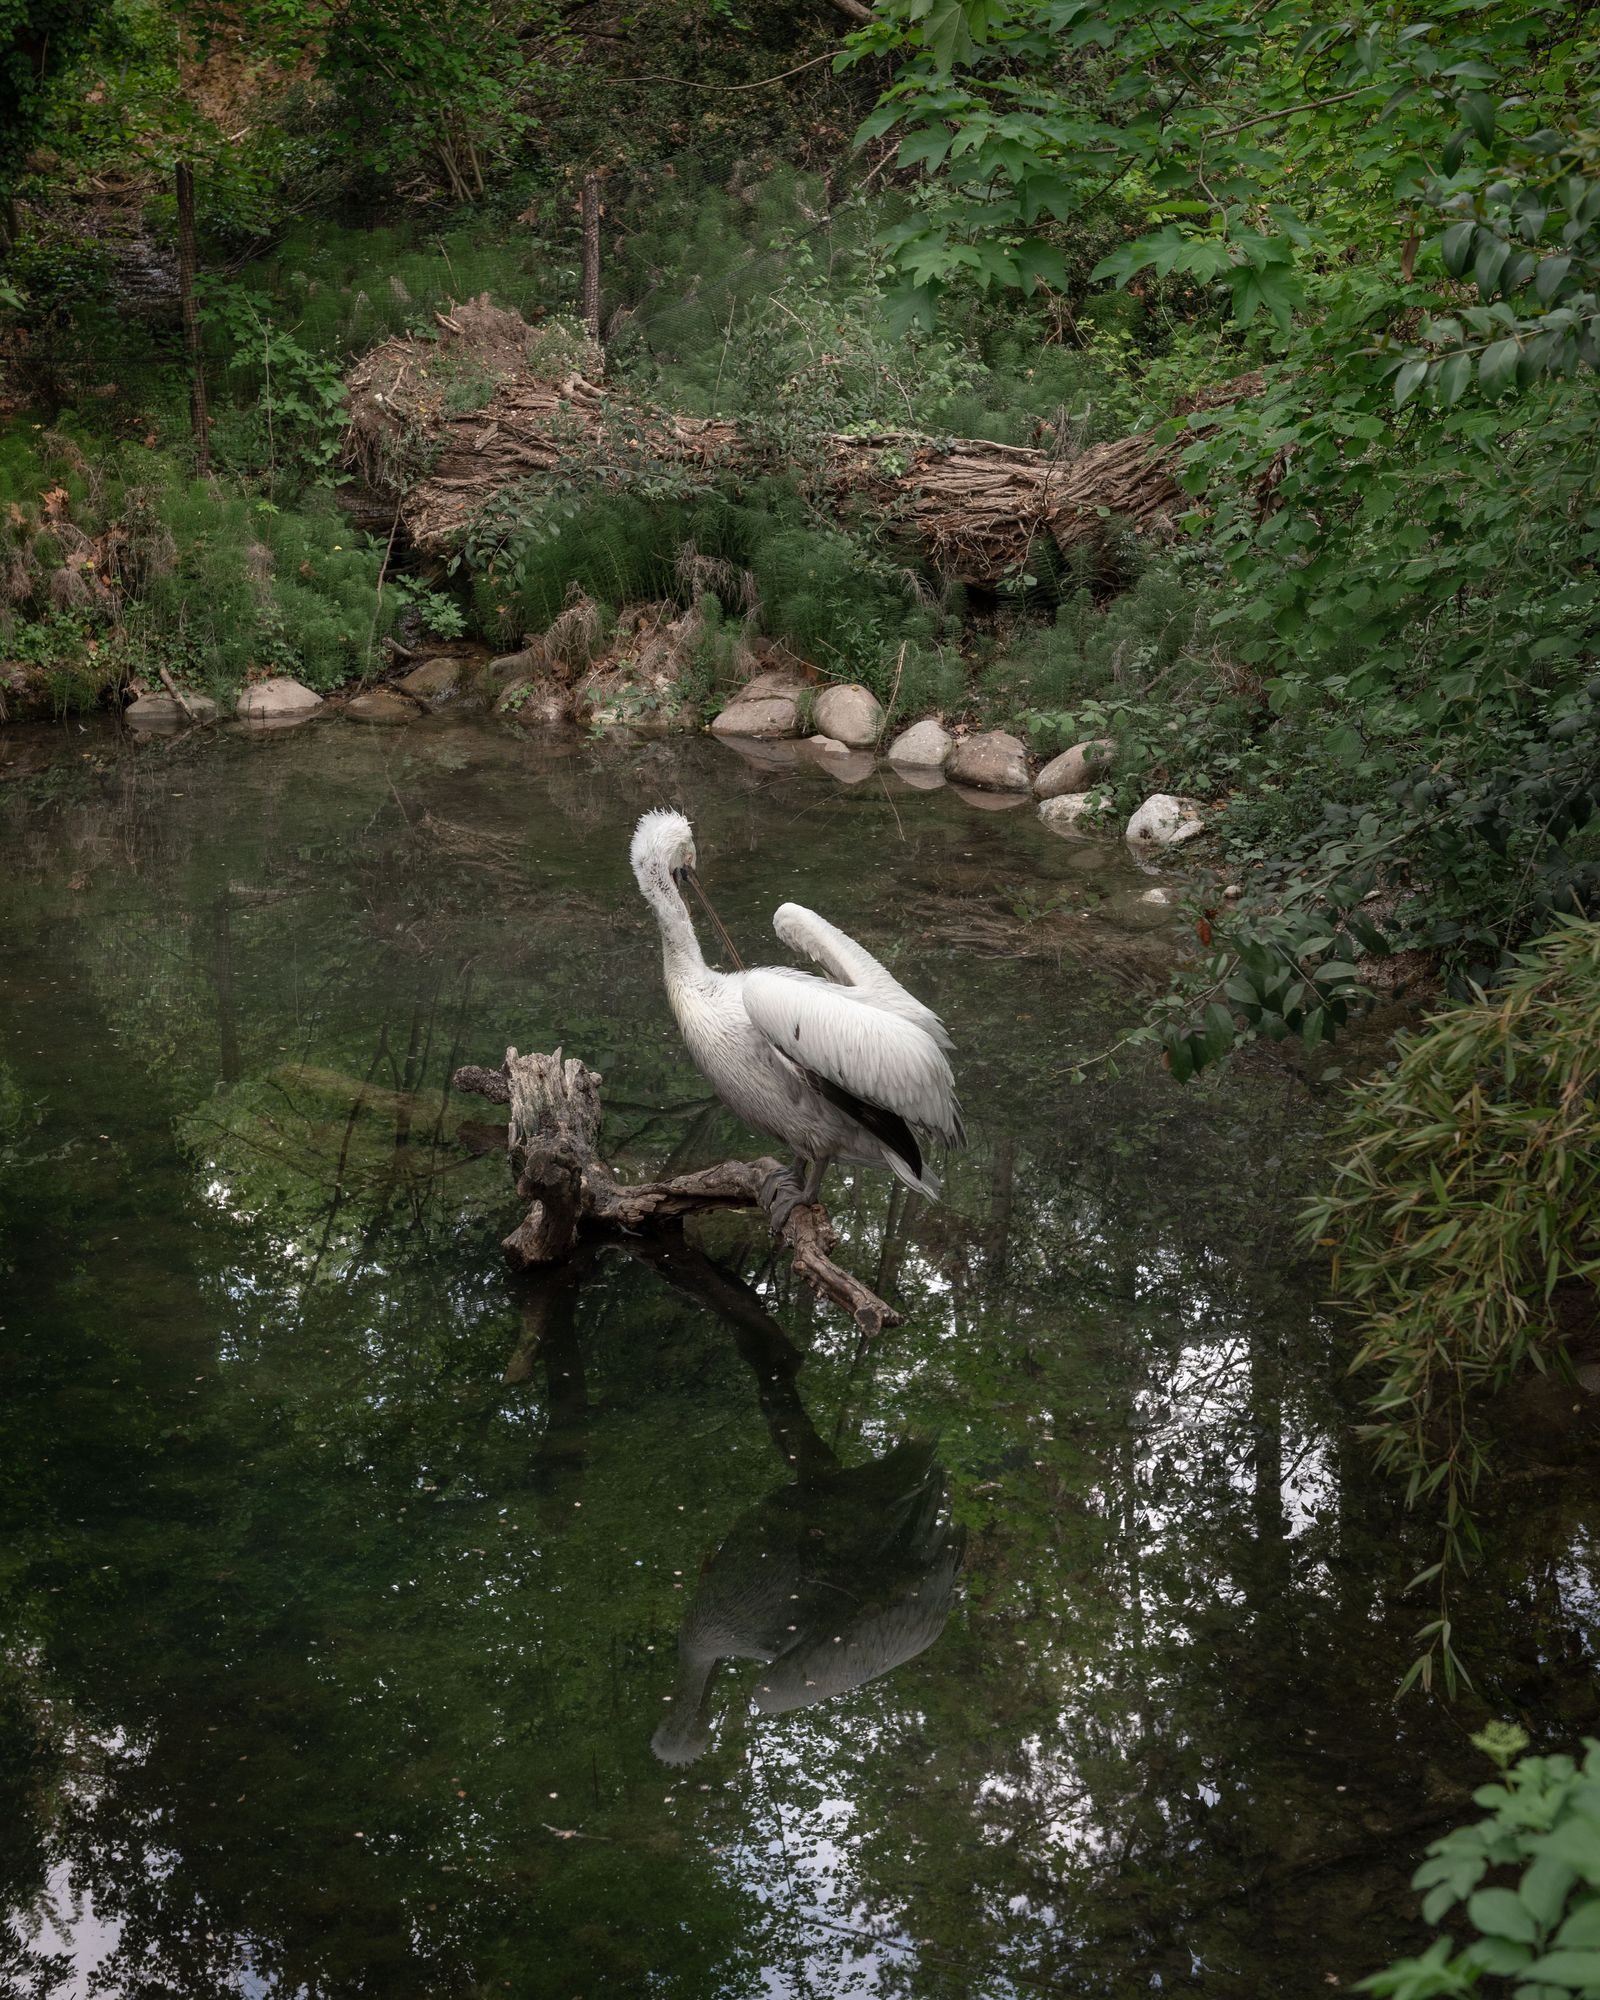 © Annalaura Cattelan - 06 - White pelican in the carp pond. (Parco Natura Viva, Bussolengo, VR)